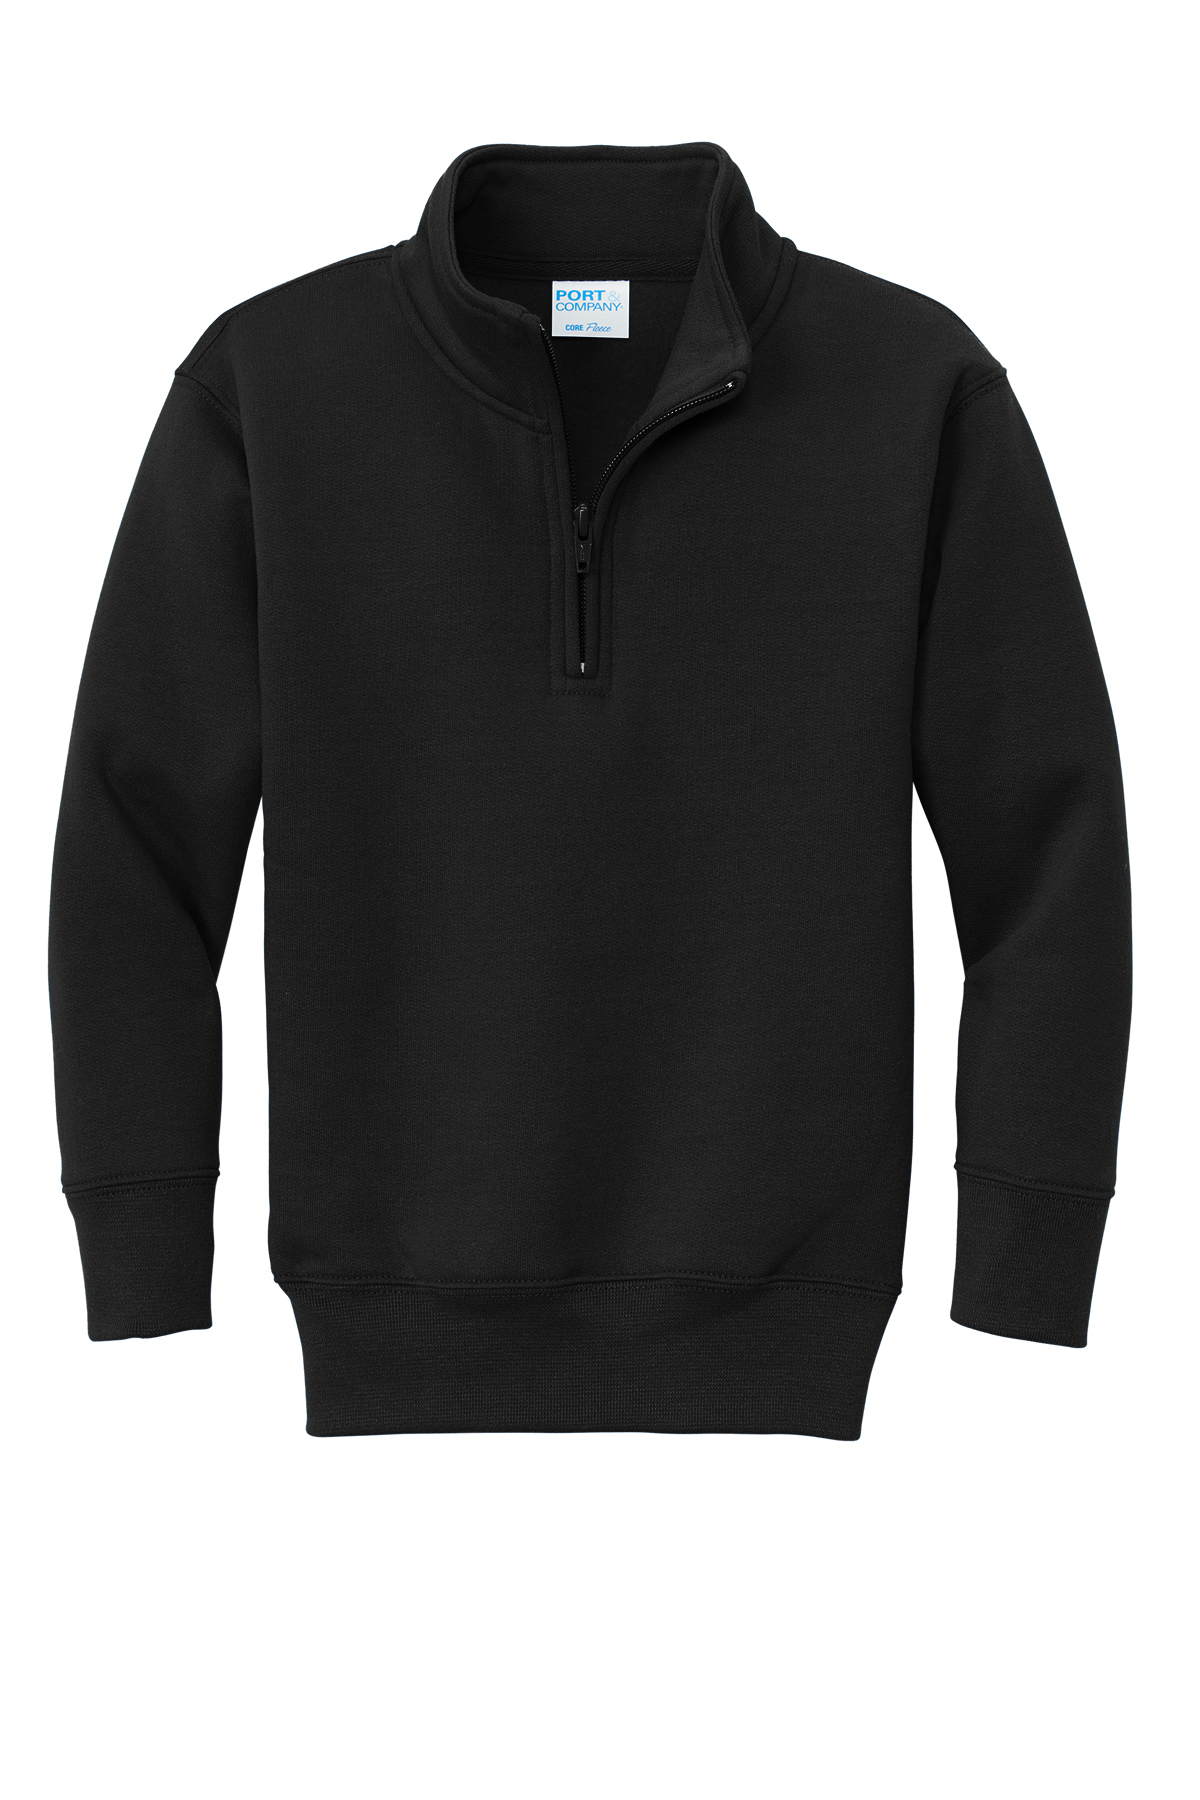 Port & Company Youth Core Fleece 1/4-Zip Pullover Sweatshirt | Product ...